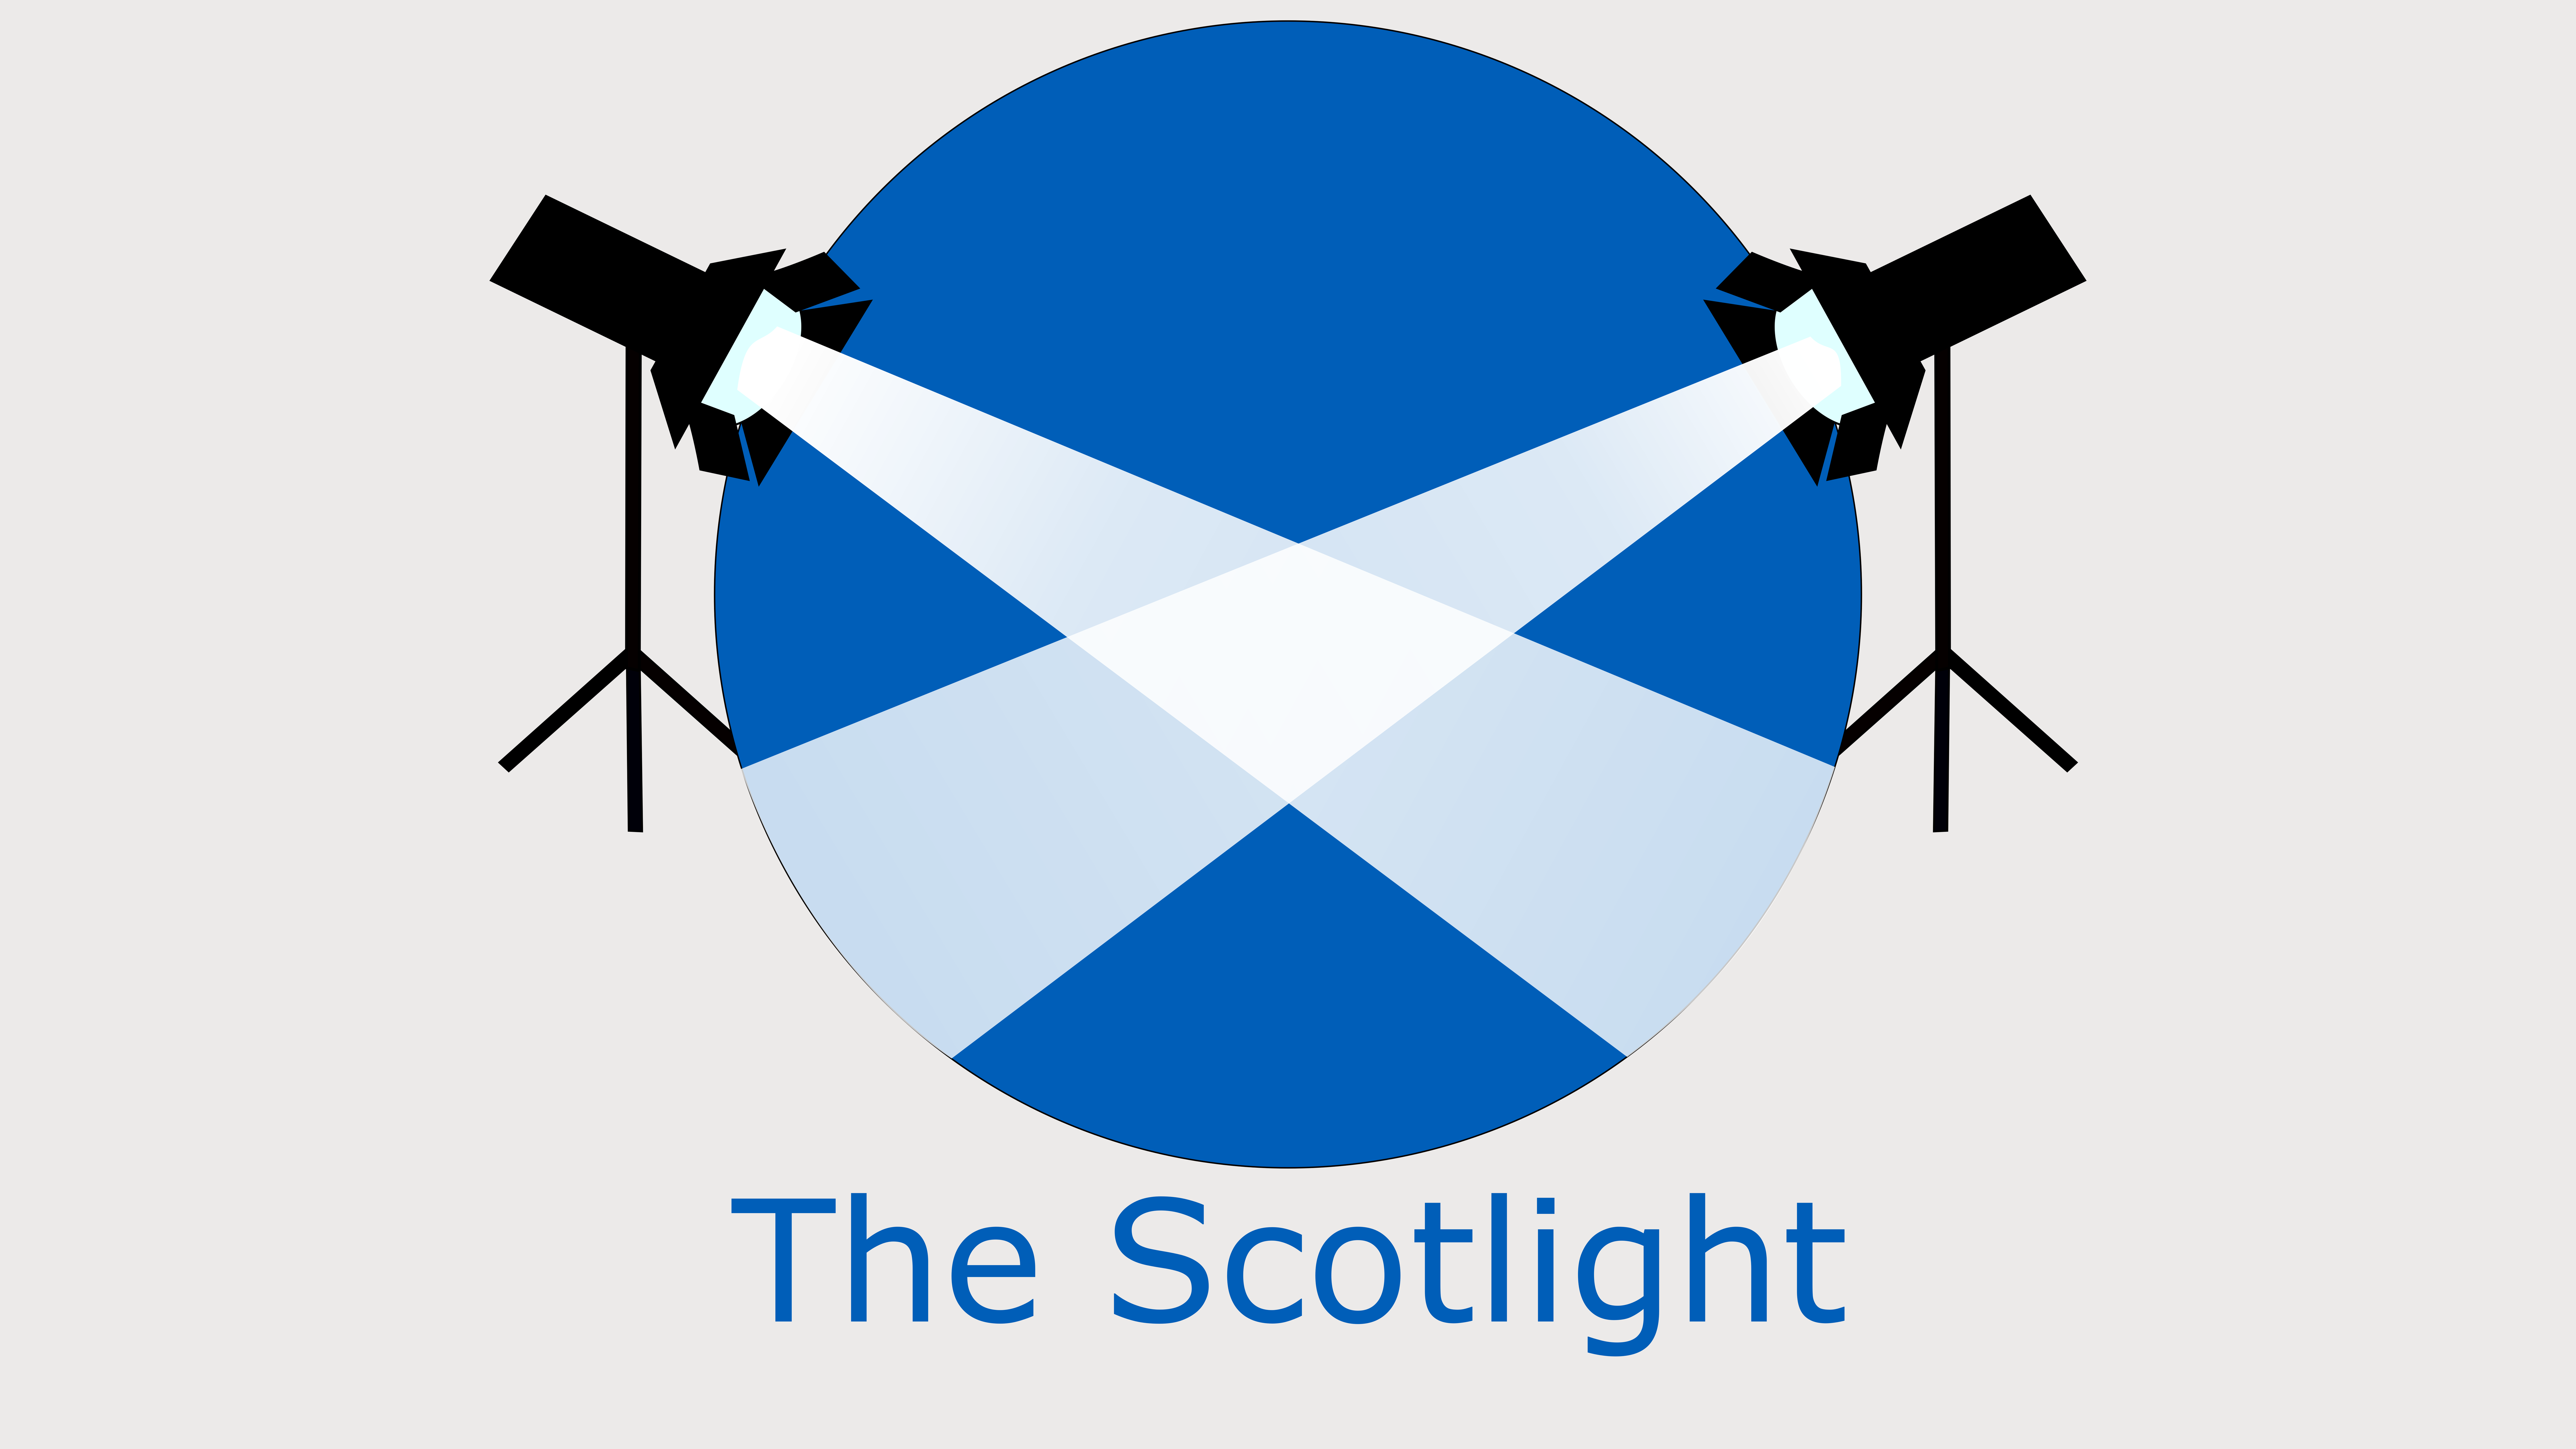 The Scotlight